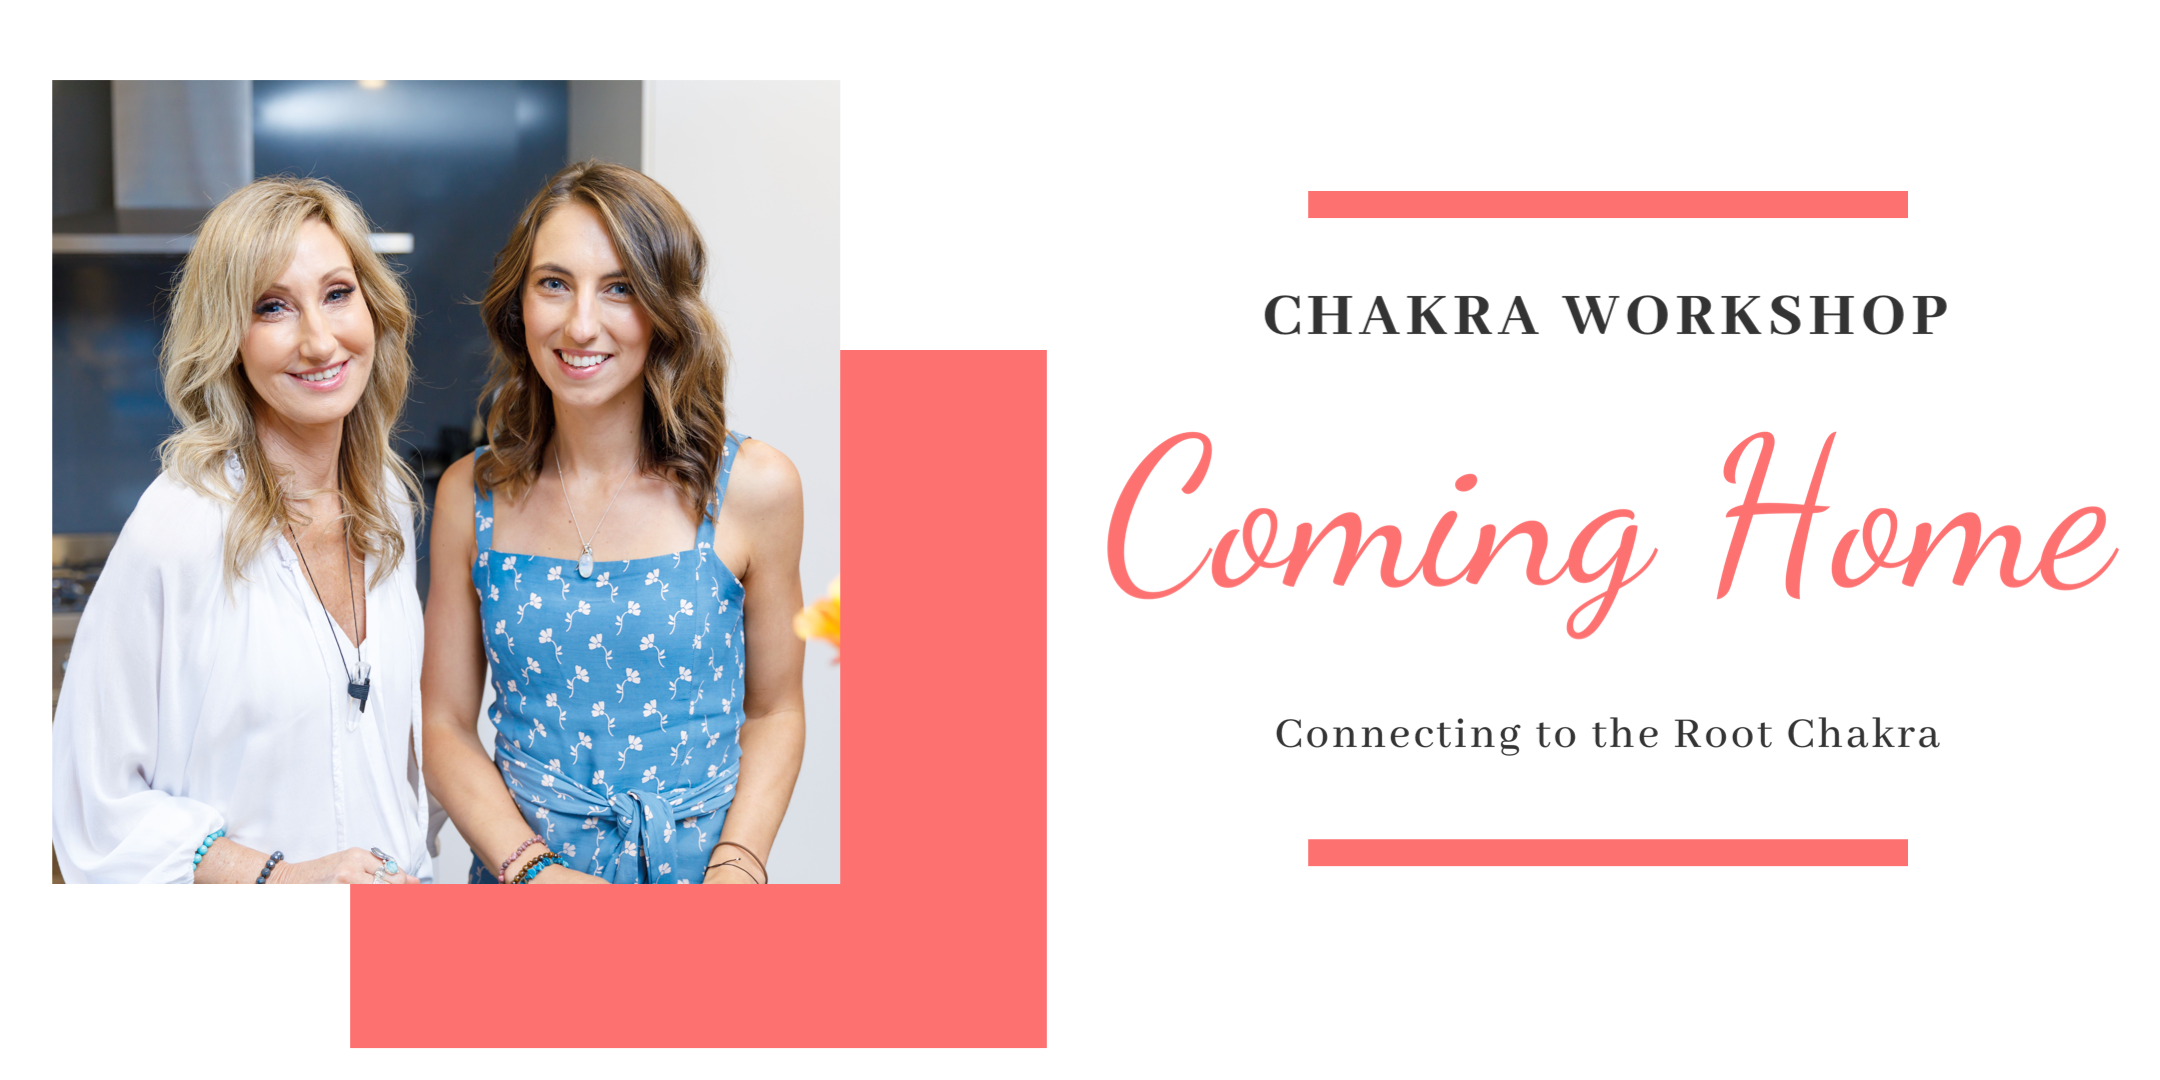 Chakra Workshop: “Coming Home“